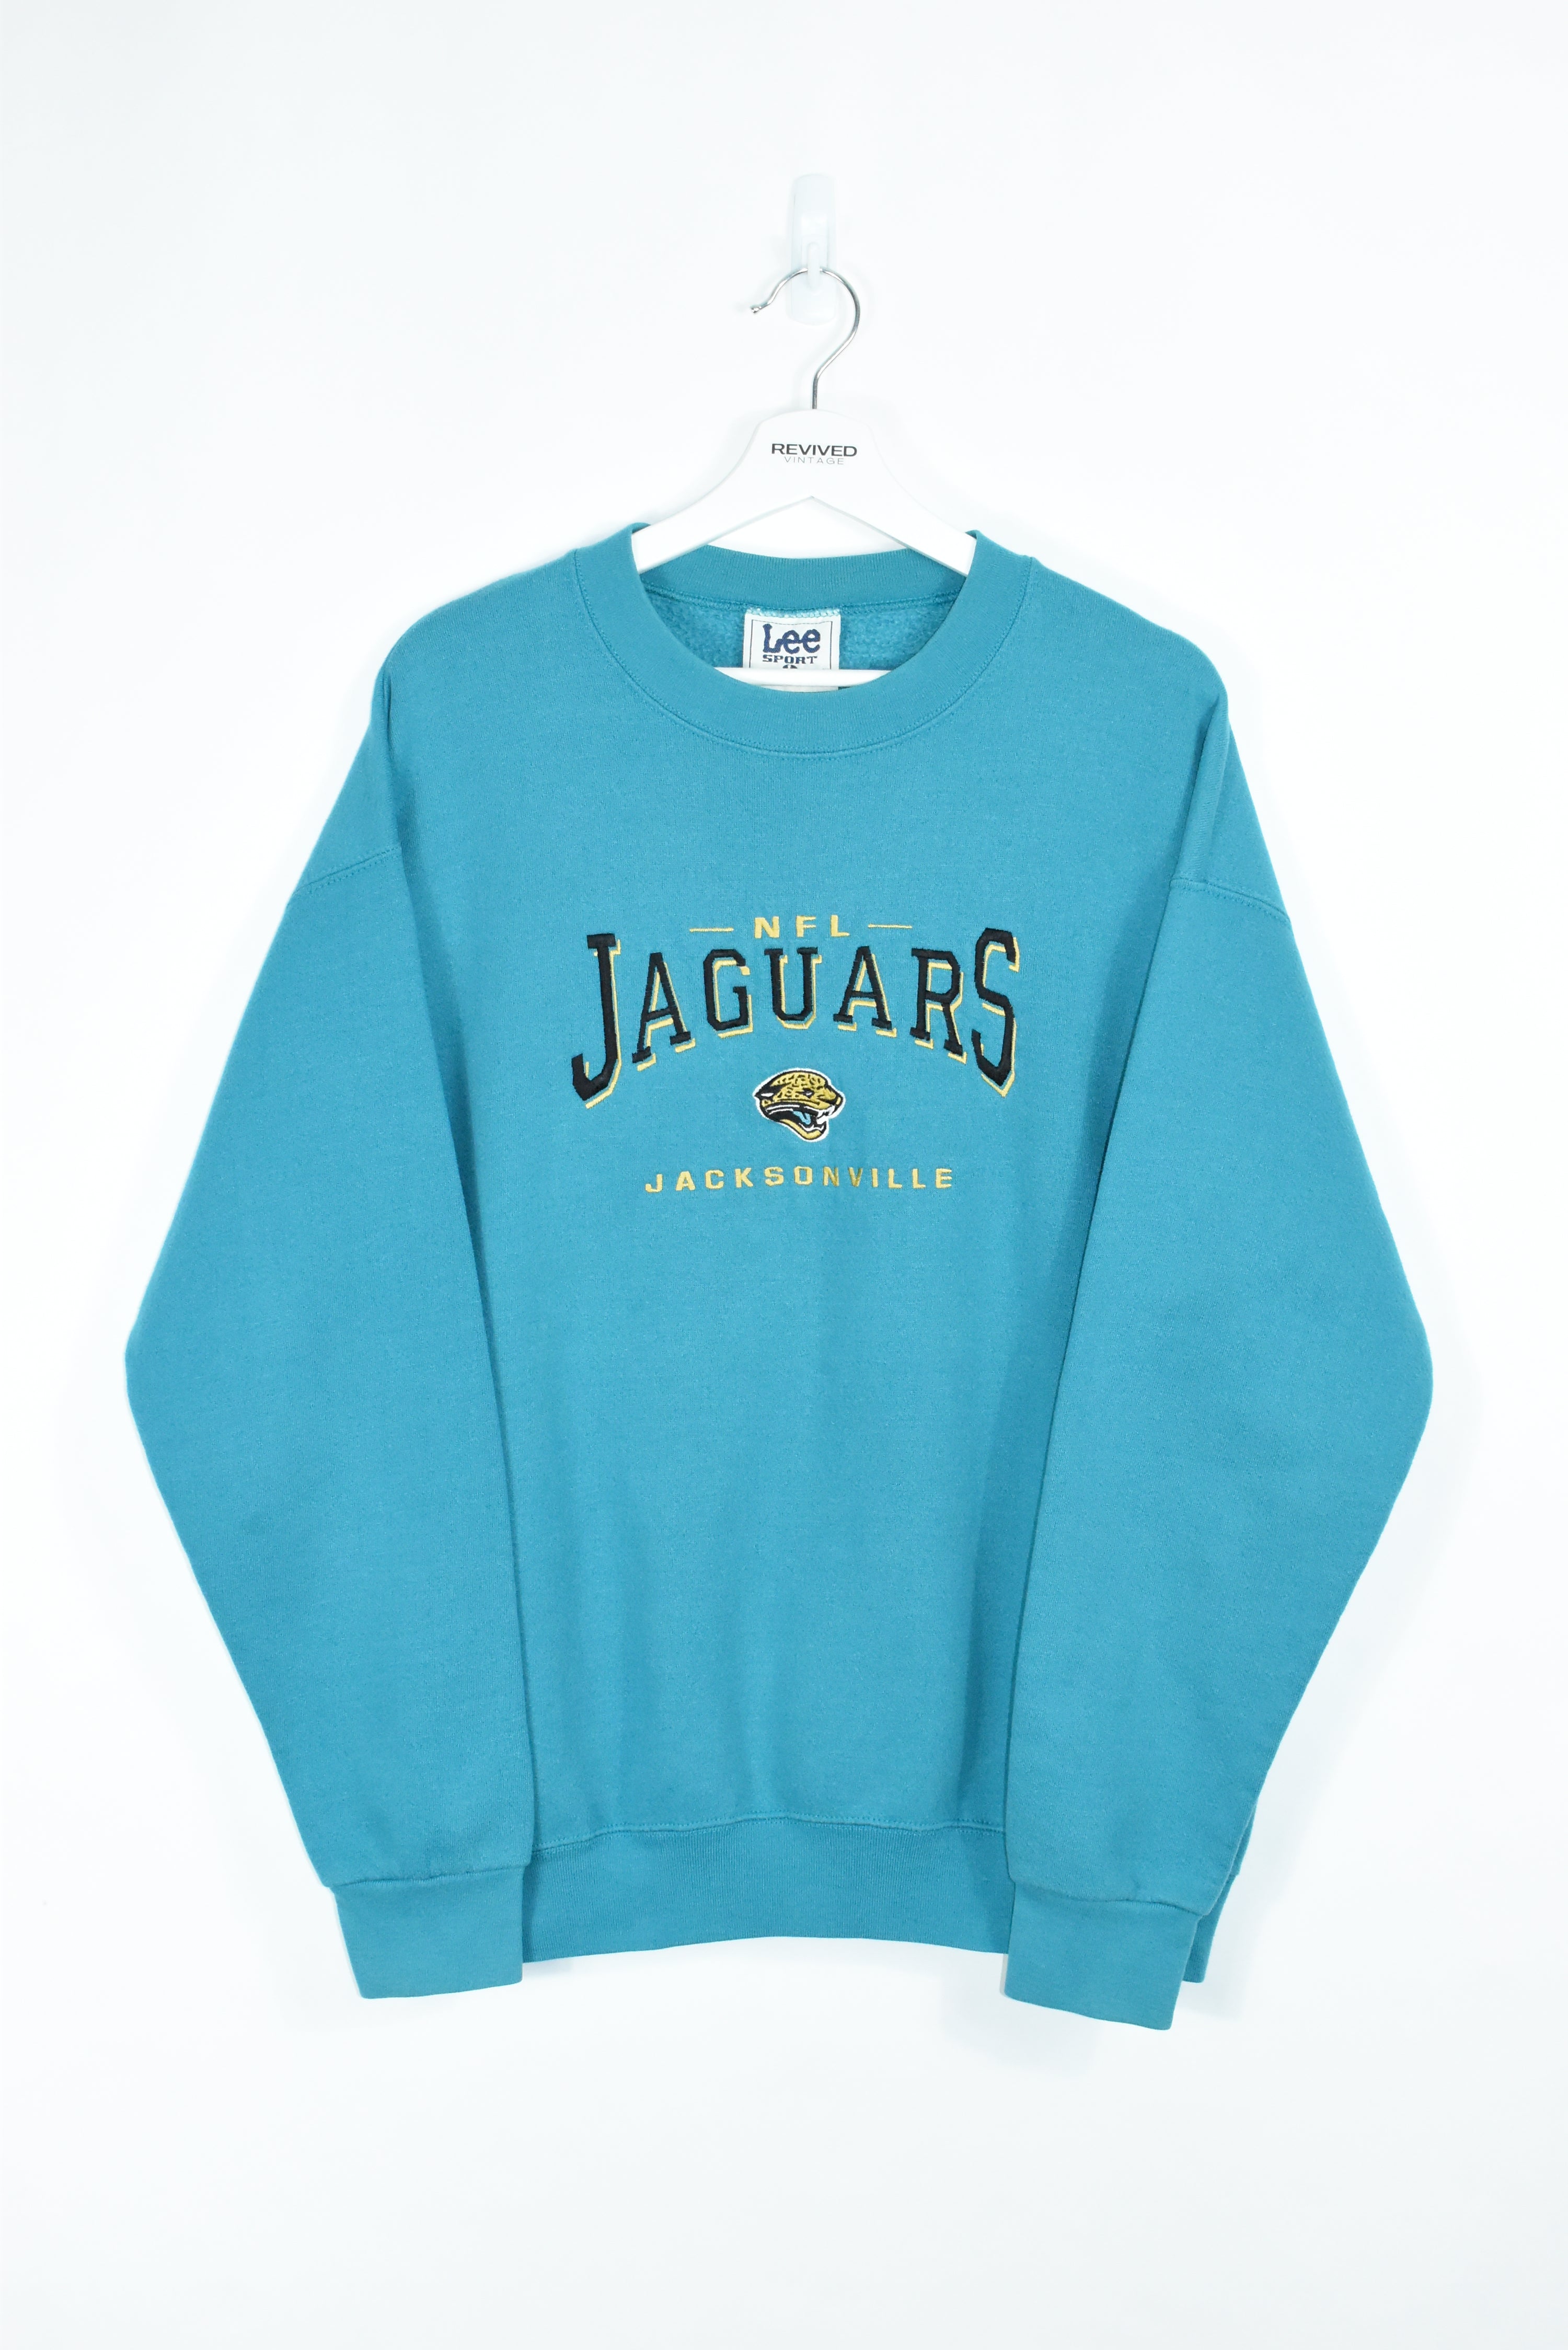 Vintage Lee Sport Jaguars Embroidery Sweatshirt Large (Baggy)